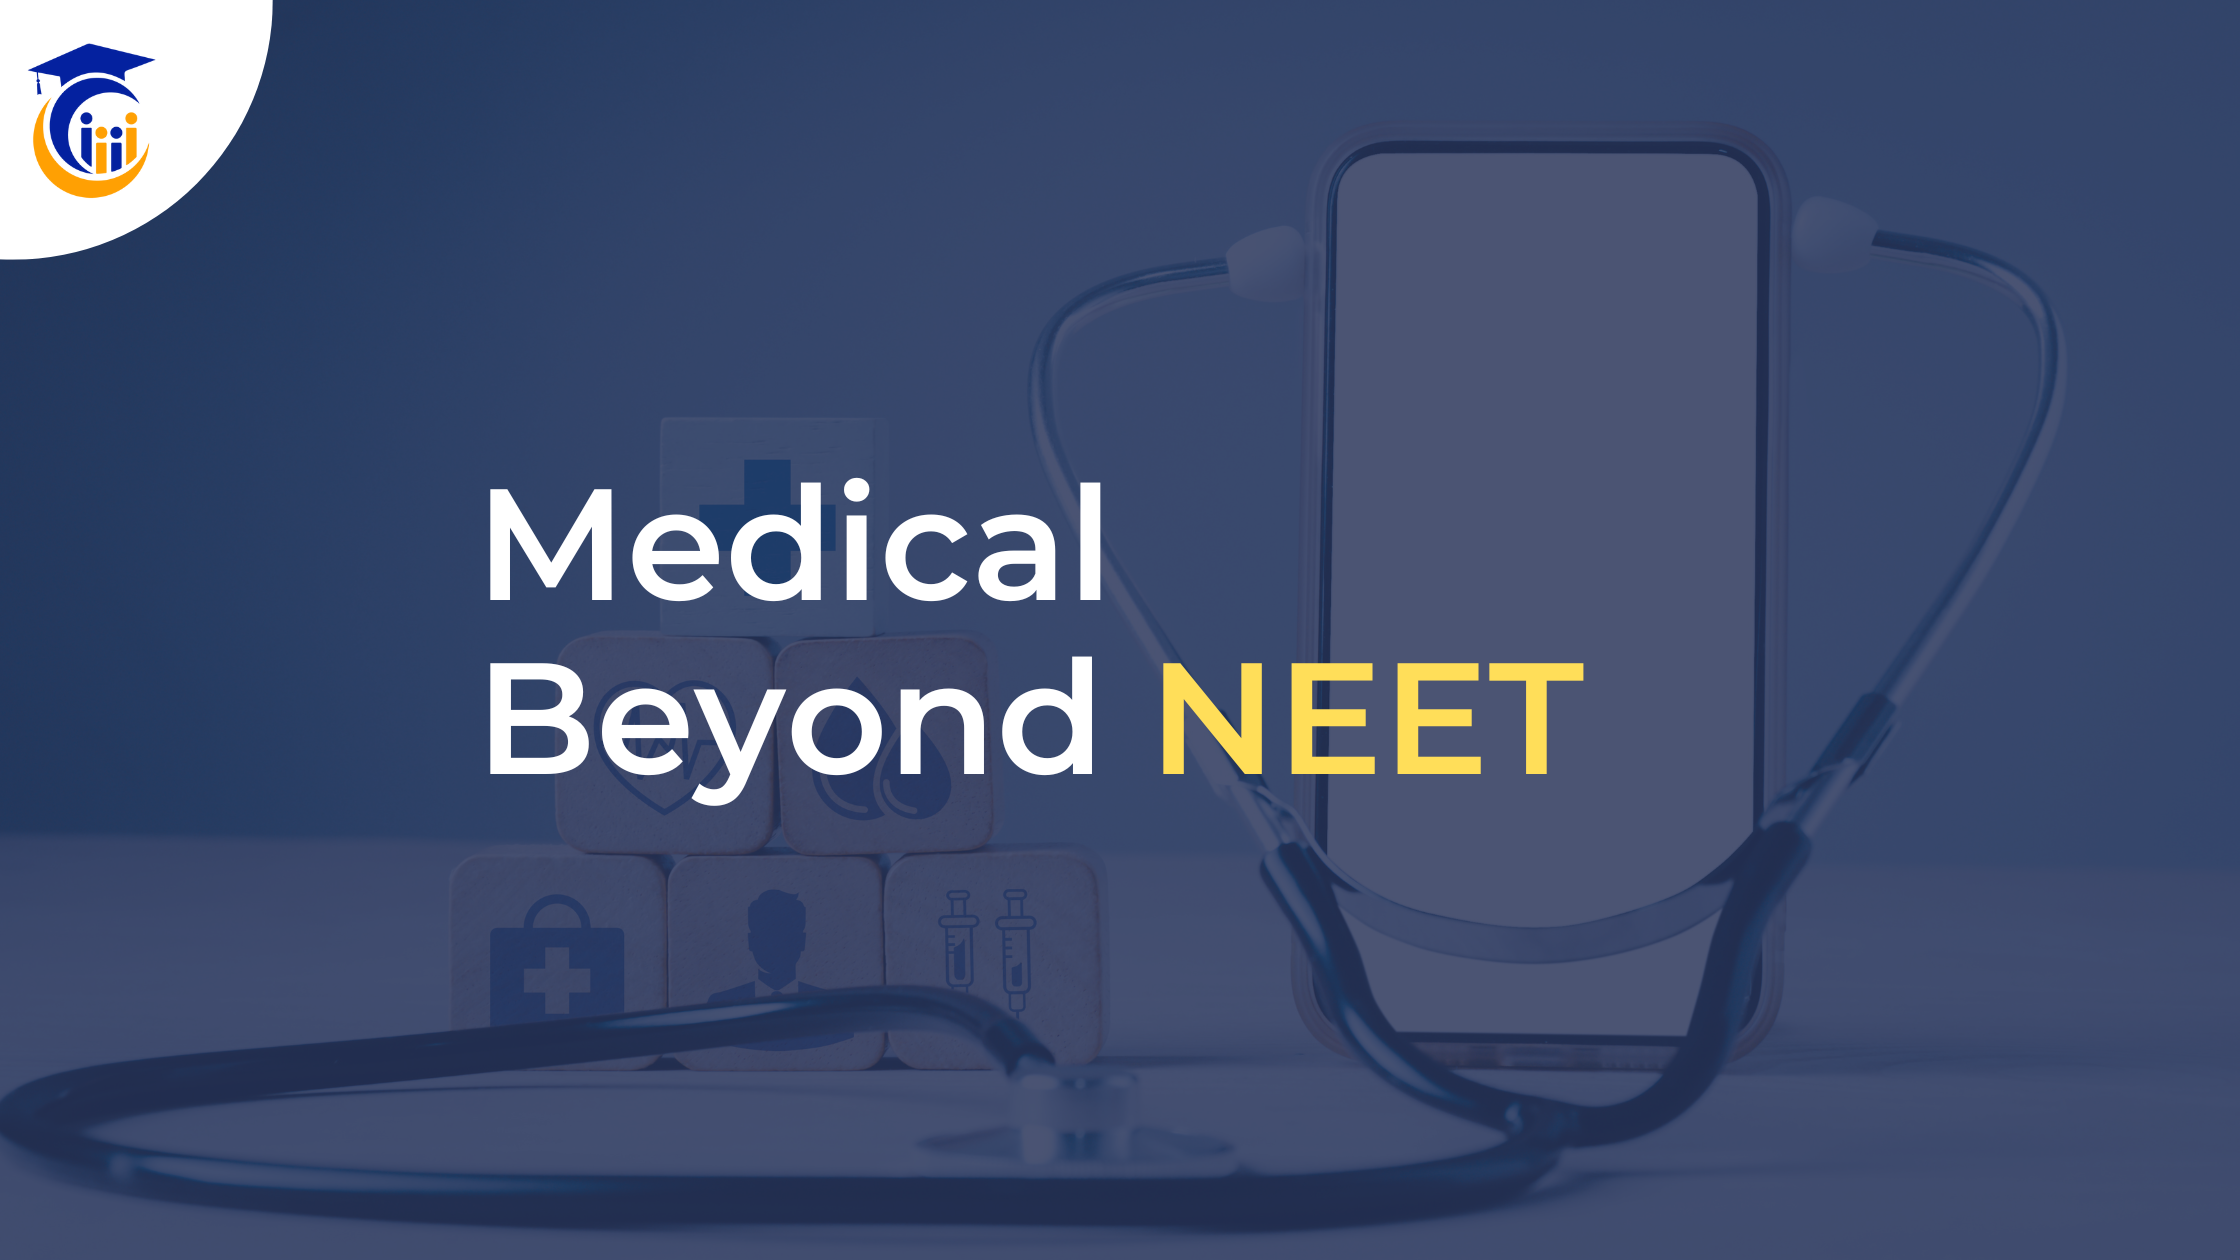 Medical beyond NEET